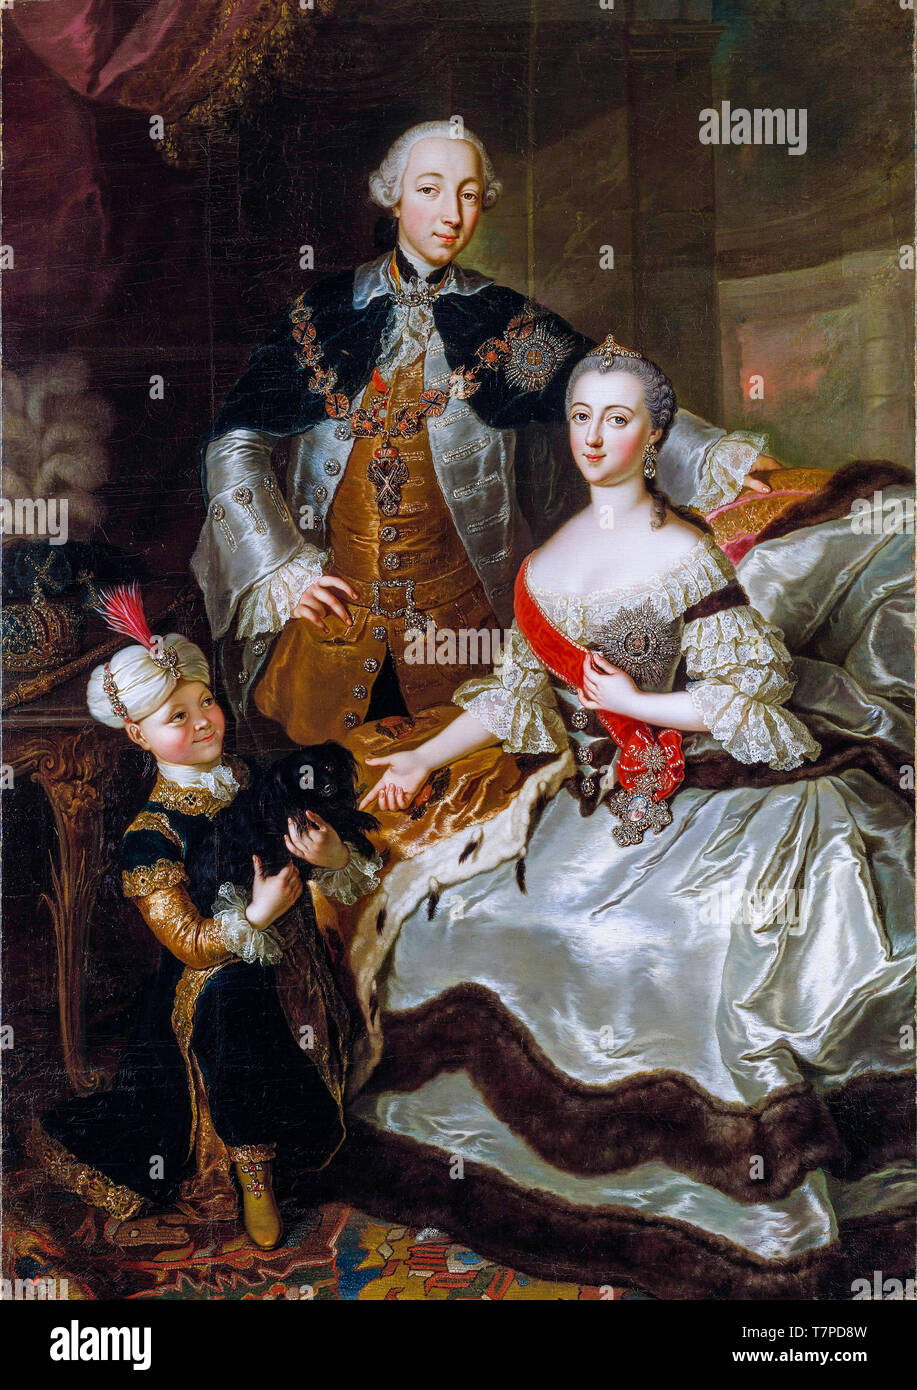 Pierre III de Russie et de la grande-duchesse Catherine II de Russie, double portrait peinture de Anna Rosina de Gasc, 1756 Banque D'Images